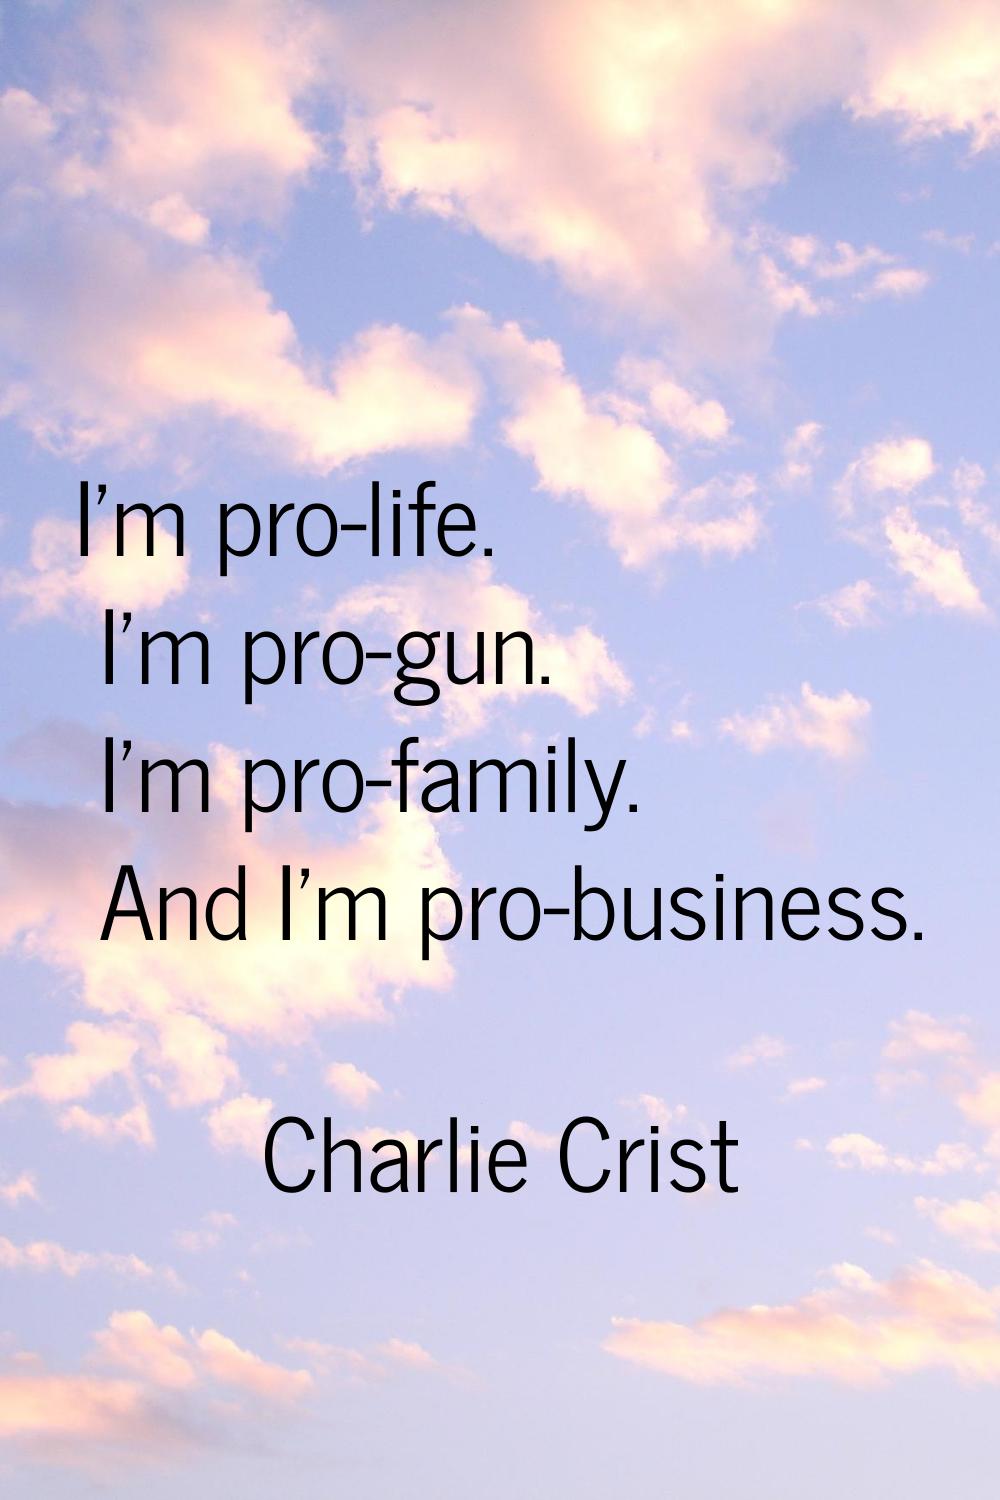 I'm pro-life. I'm pro-gun. I'm pro-family. And I'm pro-business.